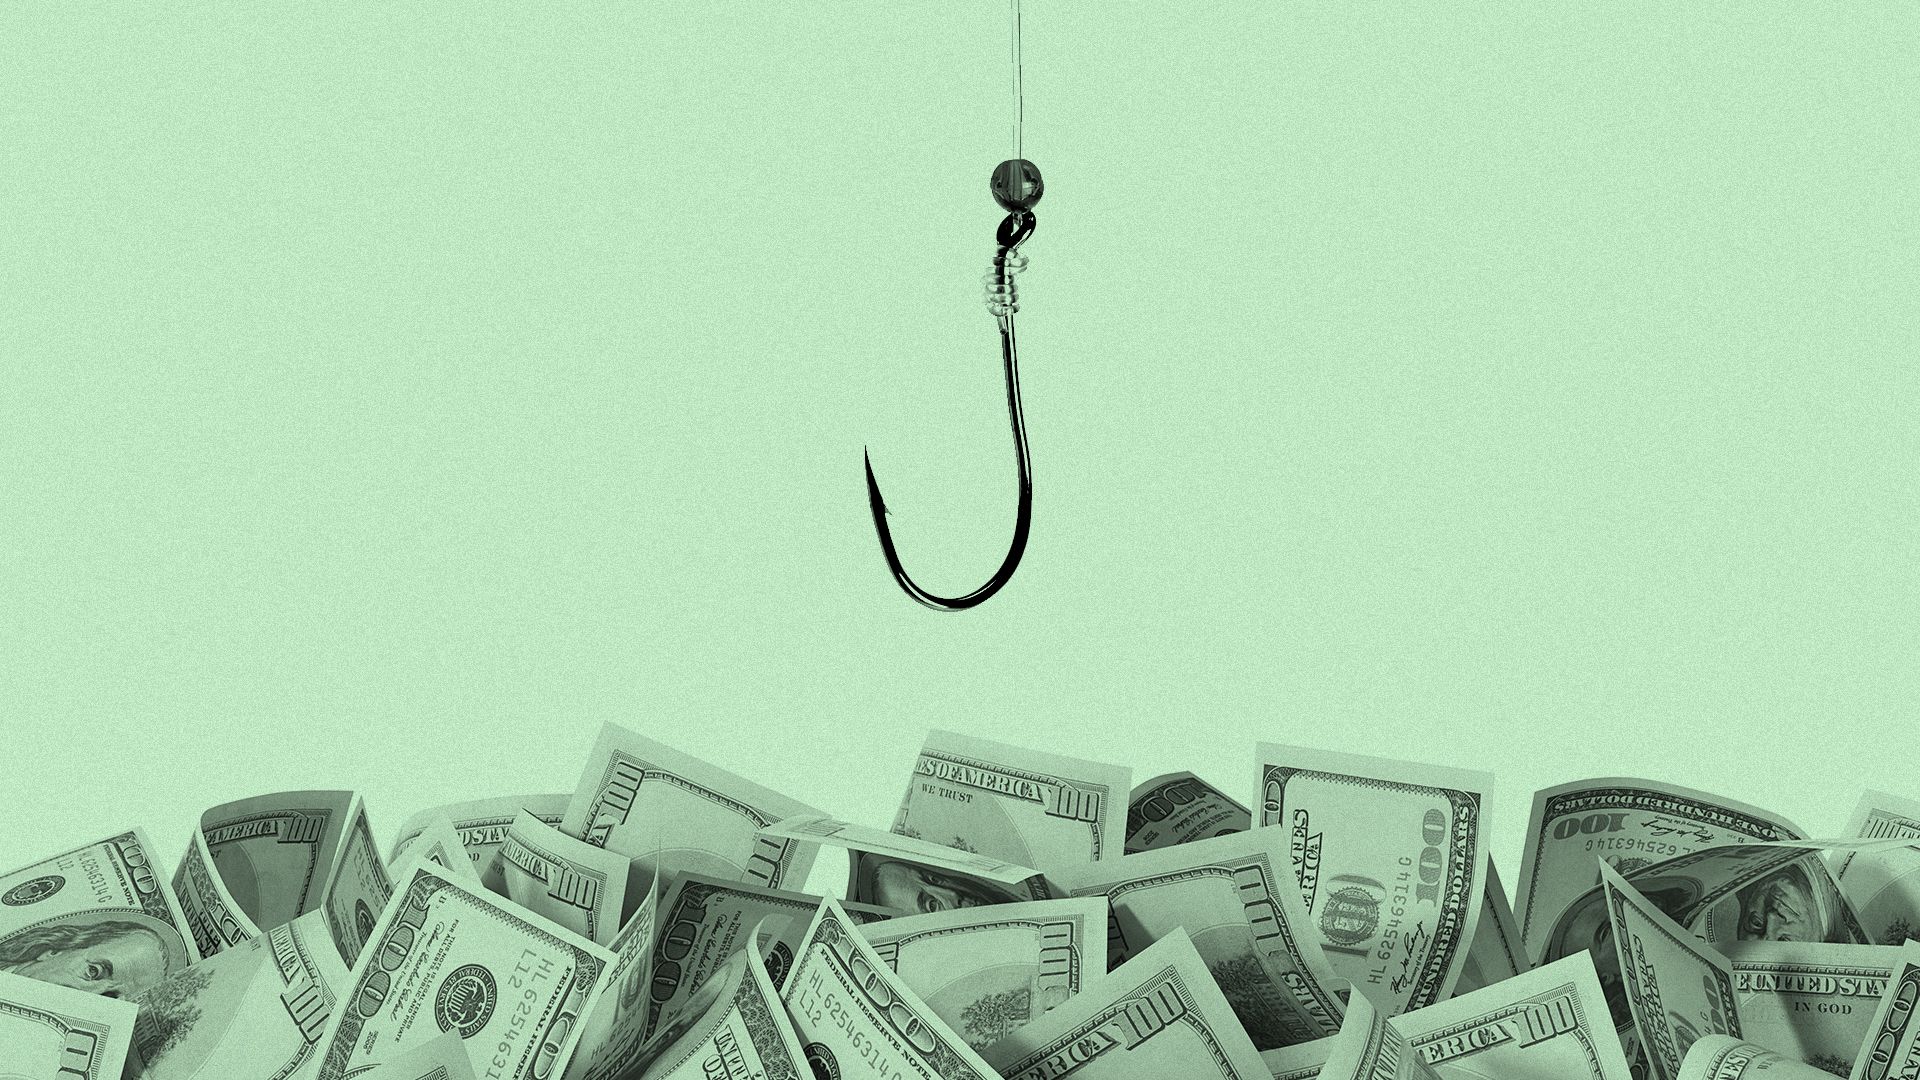 A fishing hook sinking into an ocean of hundred dollar bills